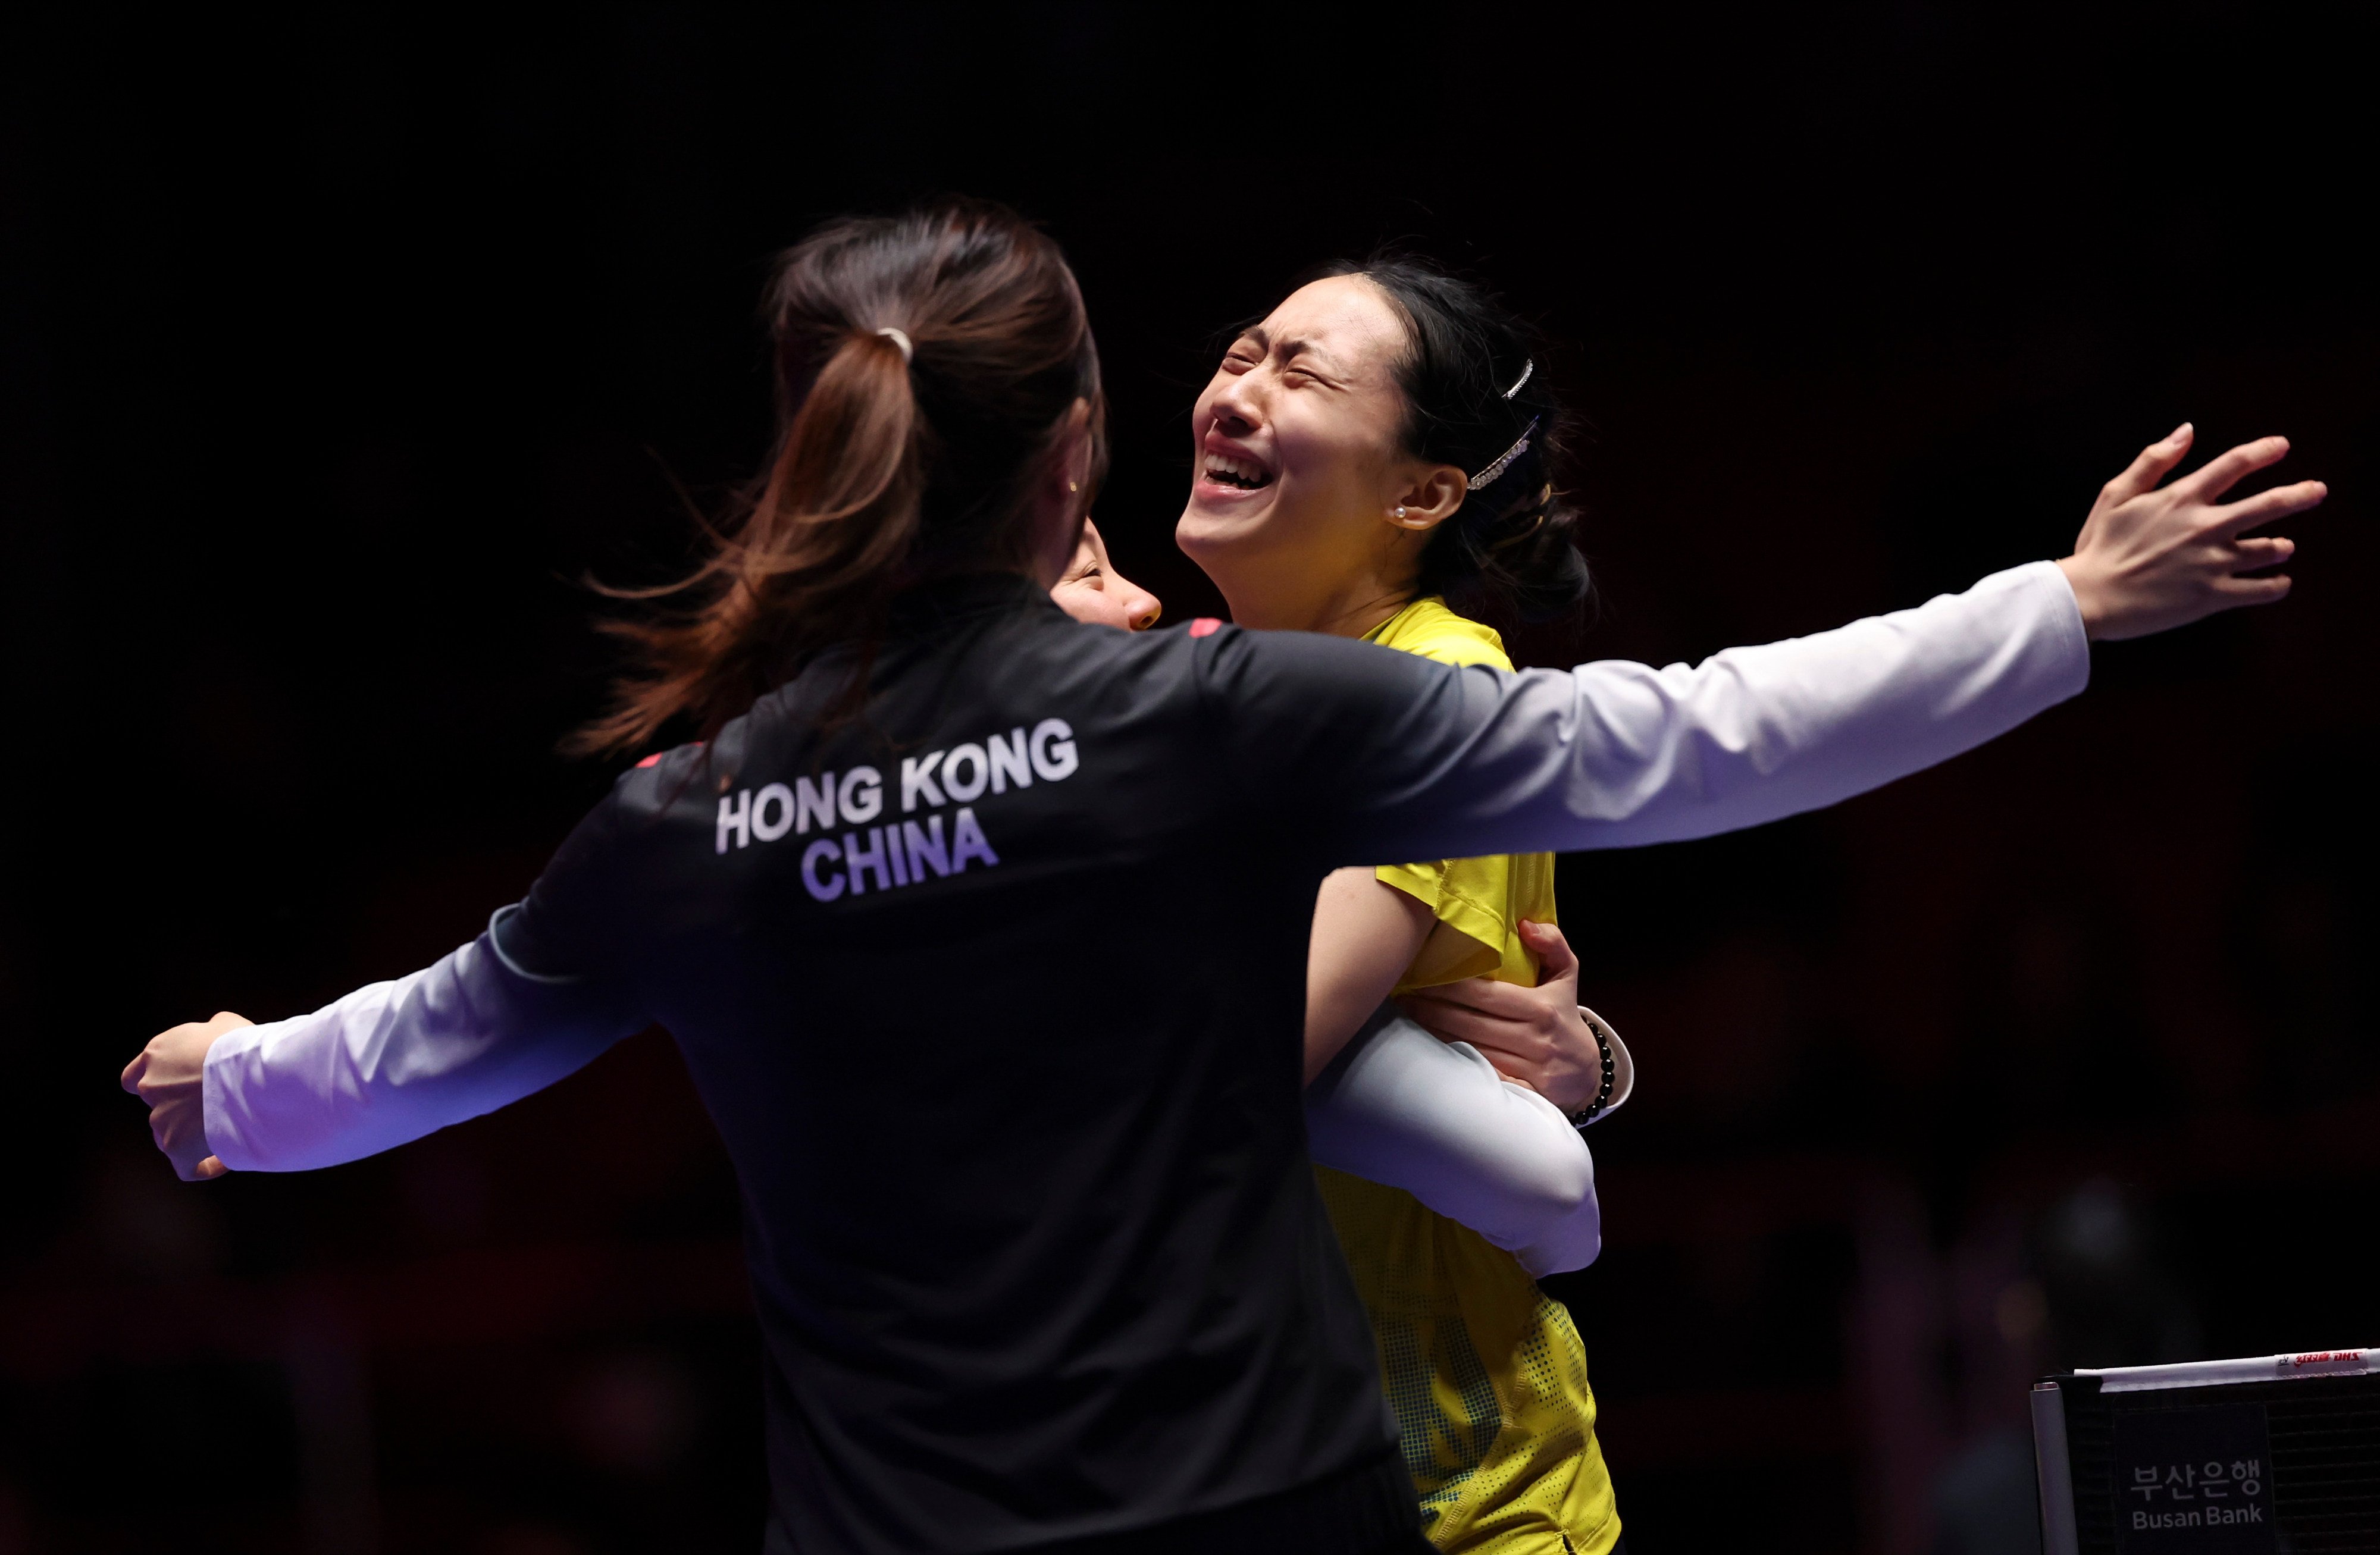 Zhu Chengzhu (right) celebrates with Hong Kong teammates after winning the deciding match against Chinese Taipei in Busan. Photo: Xinhua